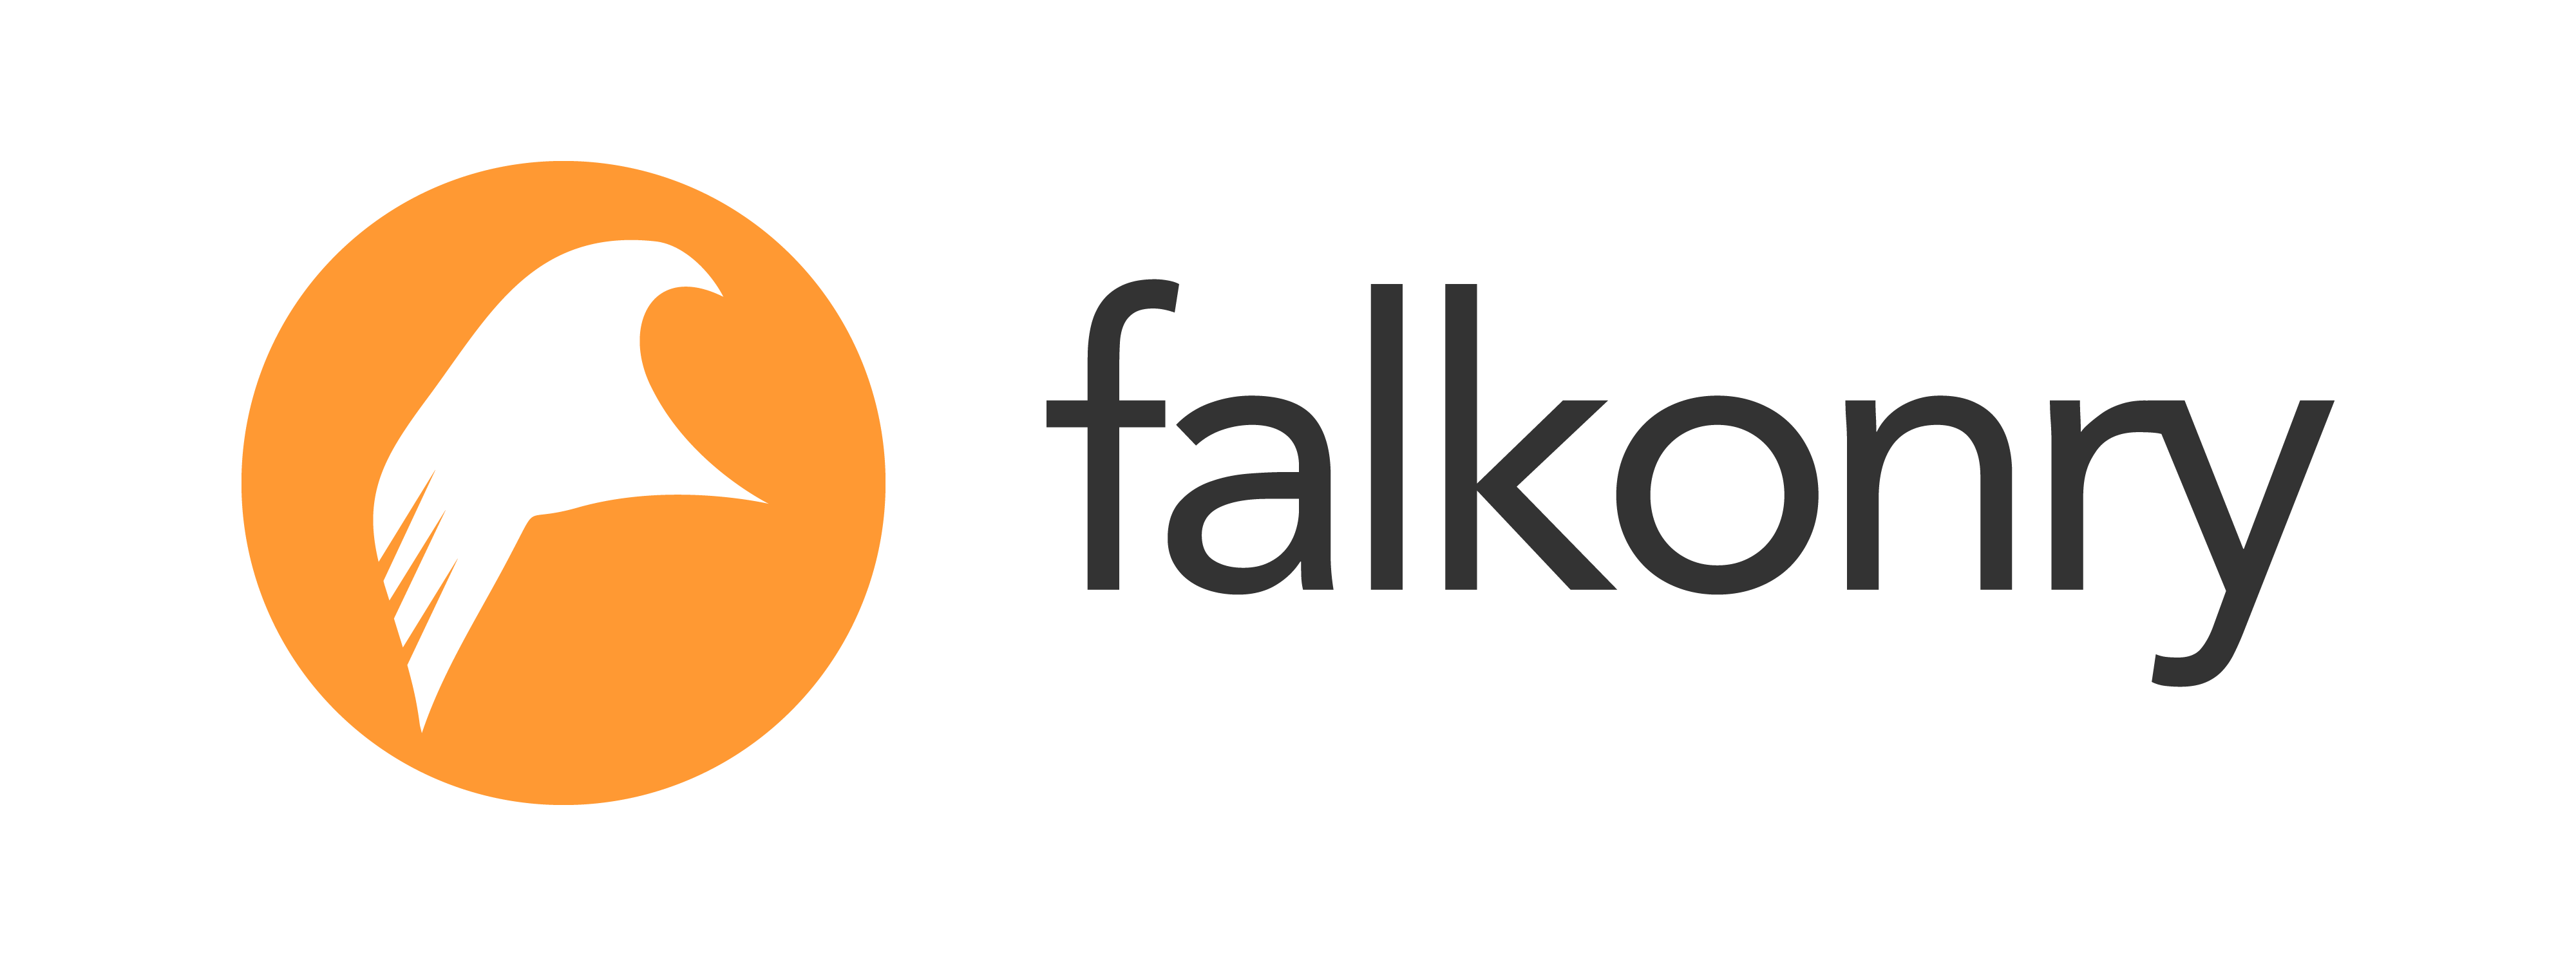 Falkonry Logo